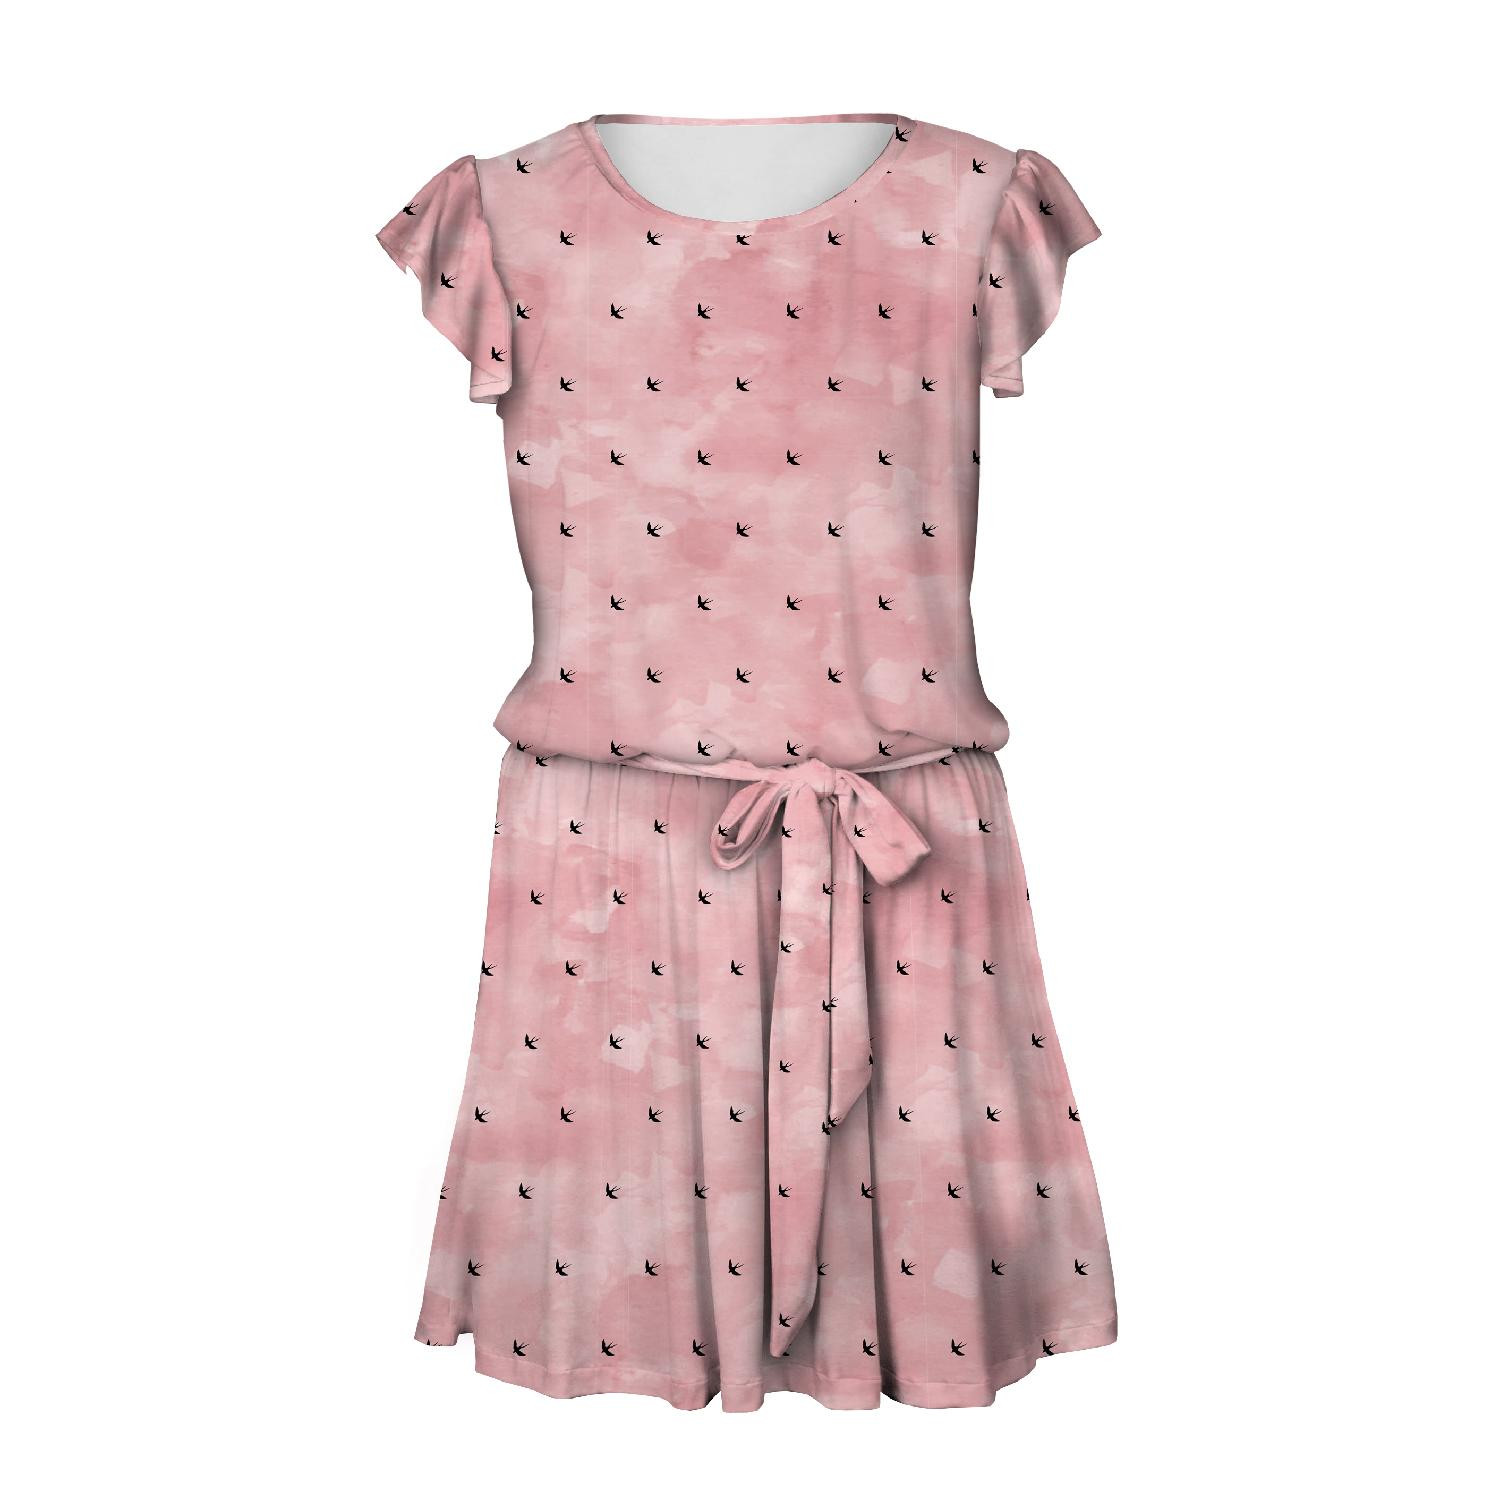 DRESS "EMMA" - SWALLOWS (minimal) / CAMOUFLAGE pat. 2 (rose quartz) - Viscose jersey with elastane